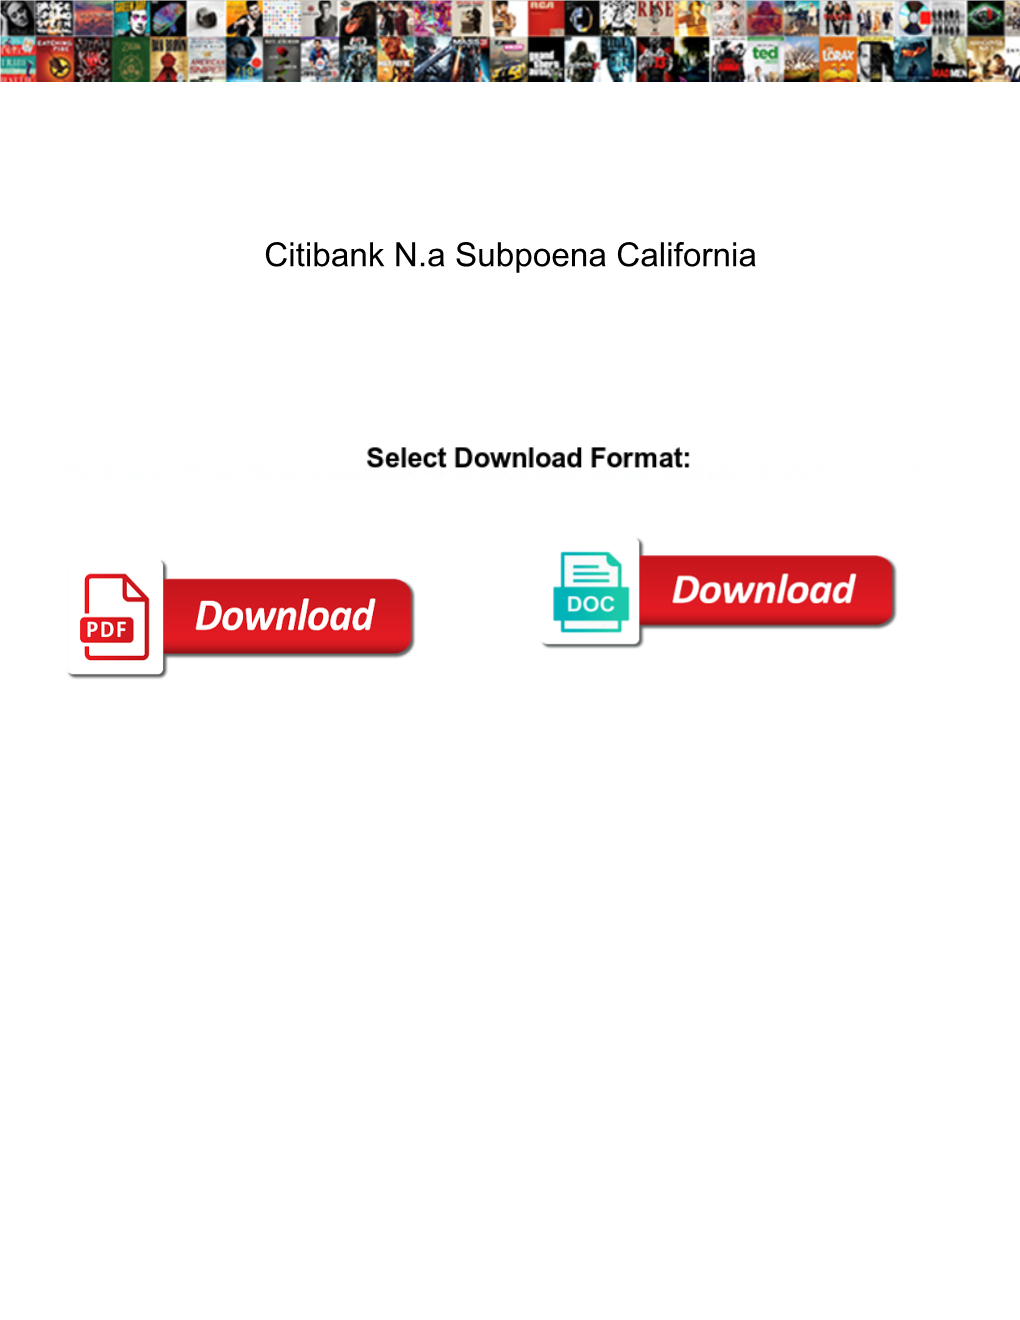 Citibank N.A Subpoena California